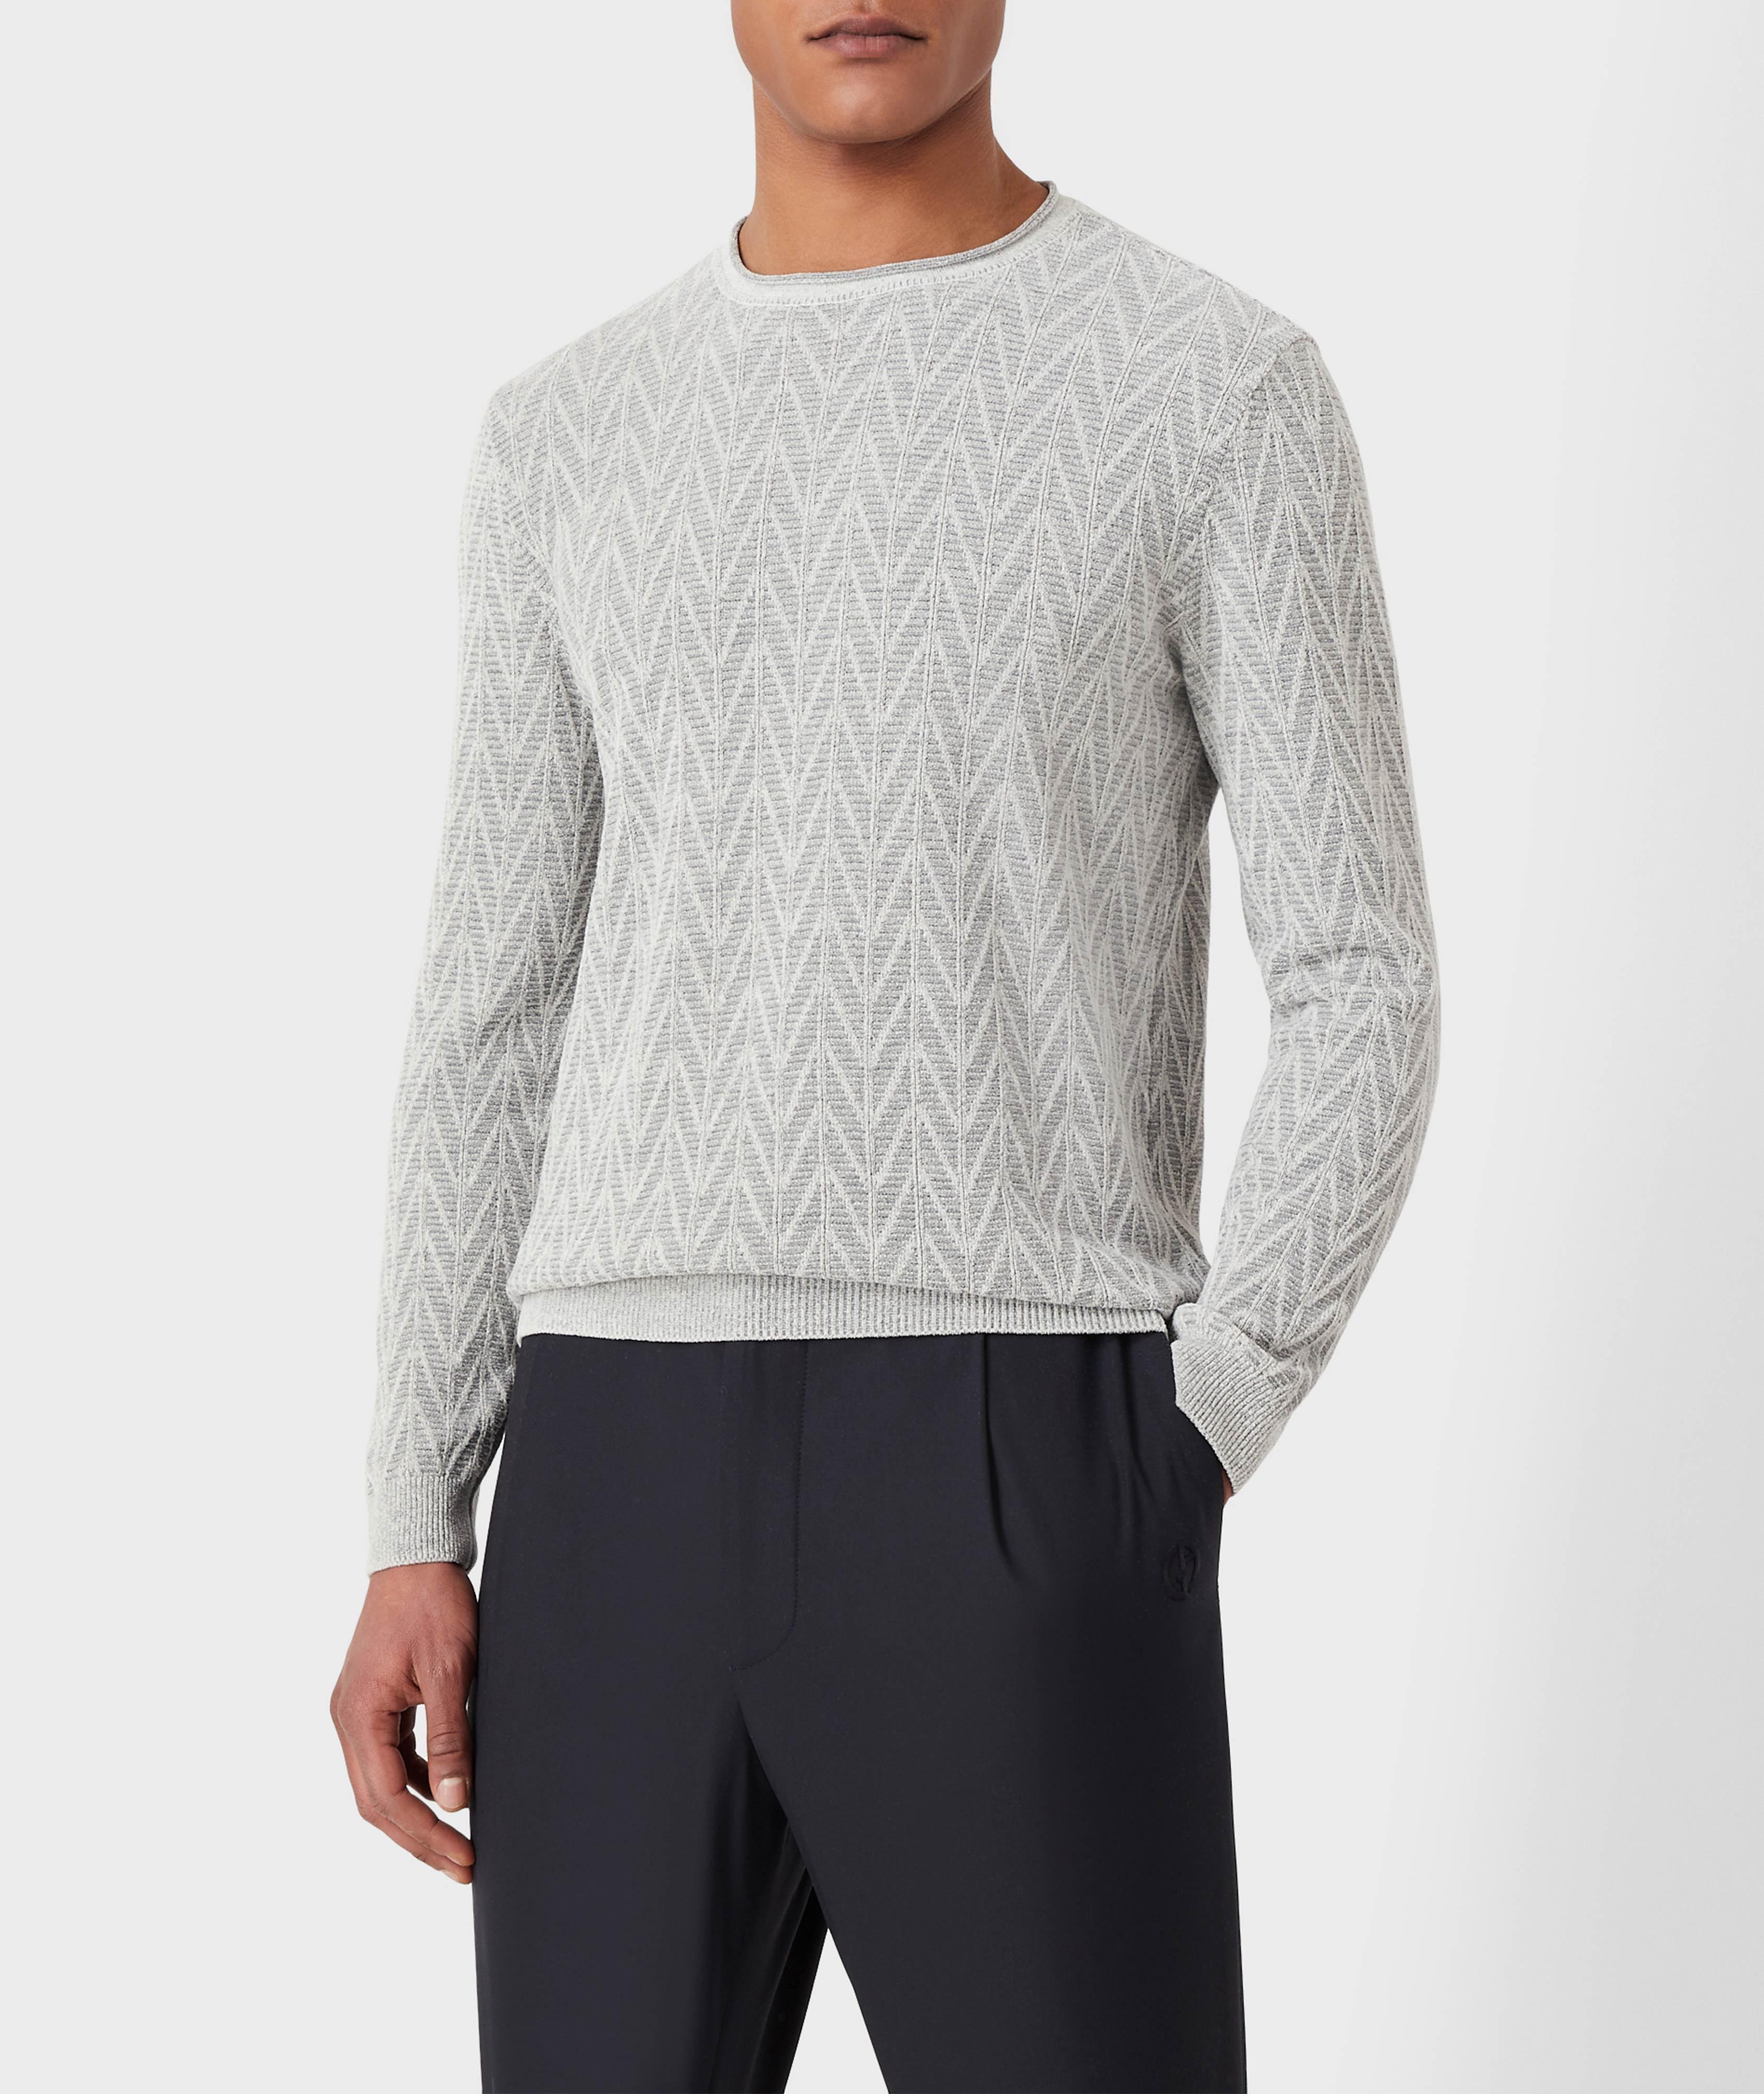 Wool-Blend Jacquard Chevron Sweater image 1